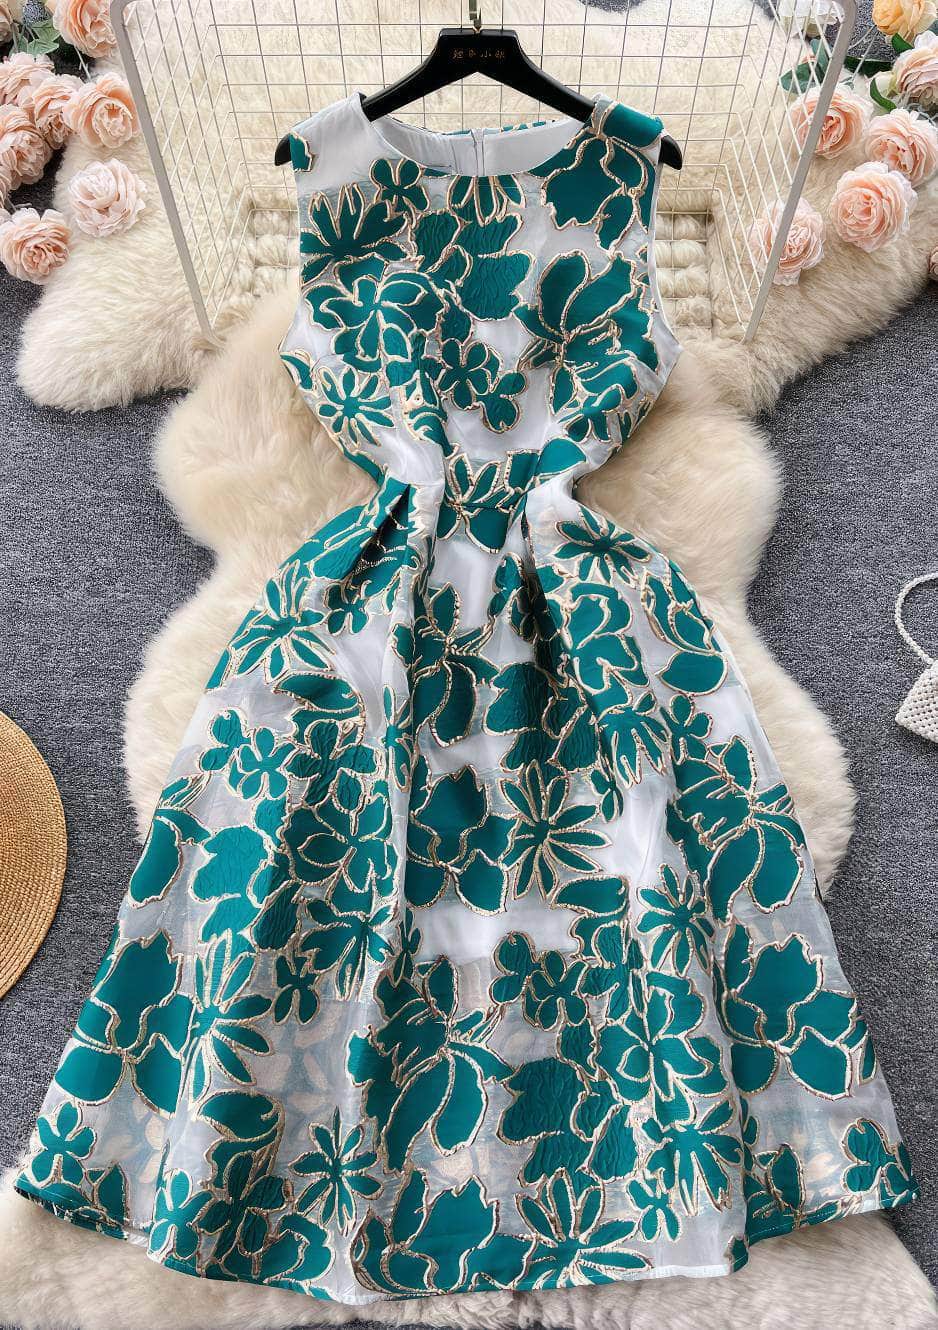 Sleeveless Floral Print Jacquard A-line Dress S / Turquoise